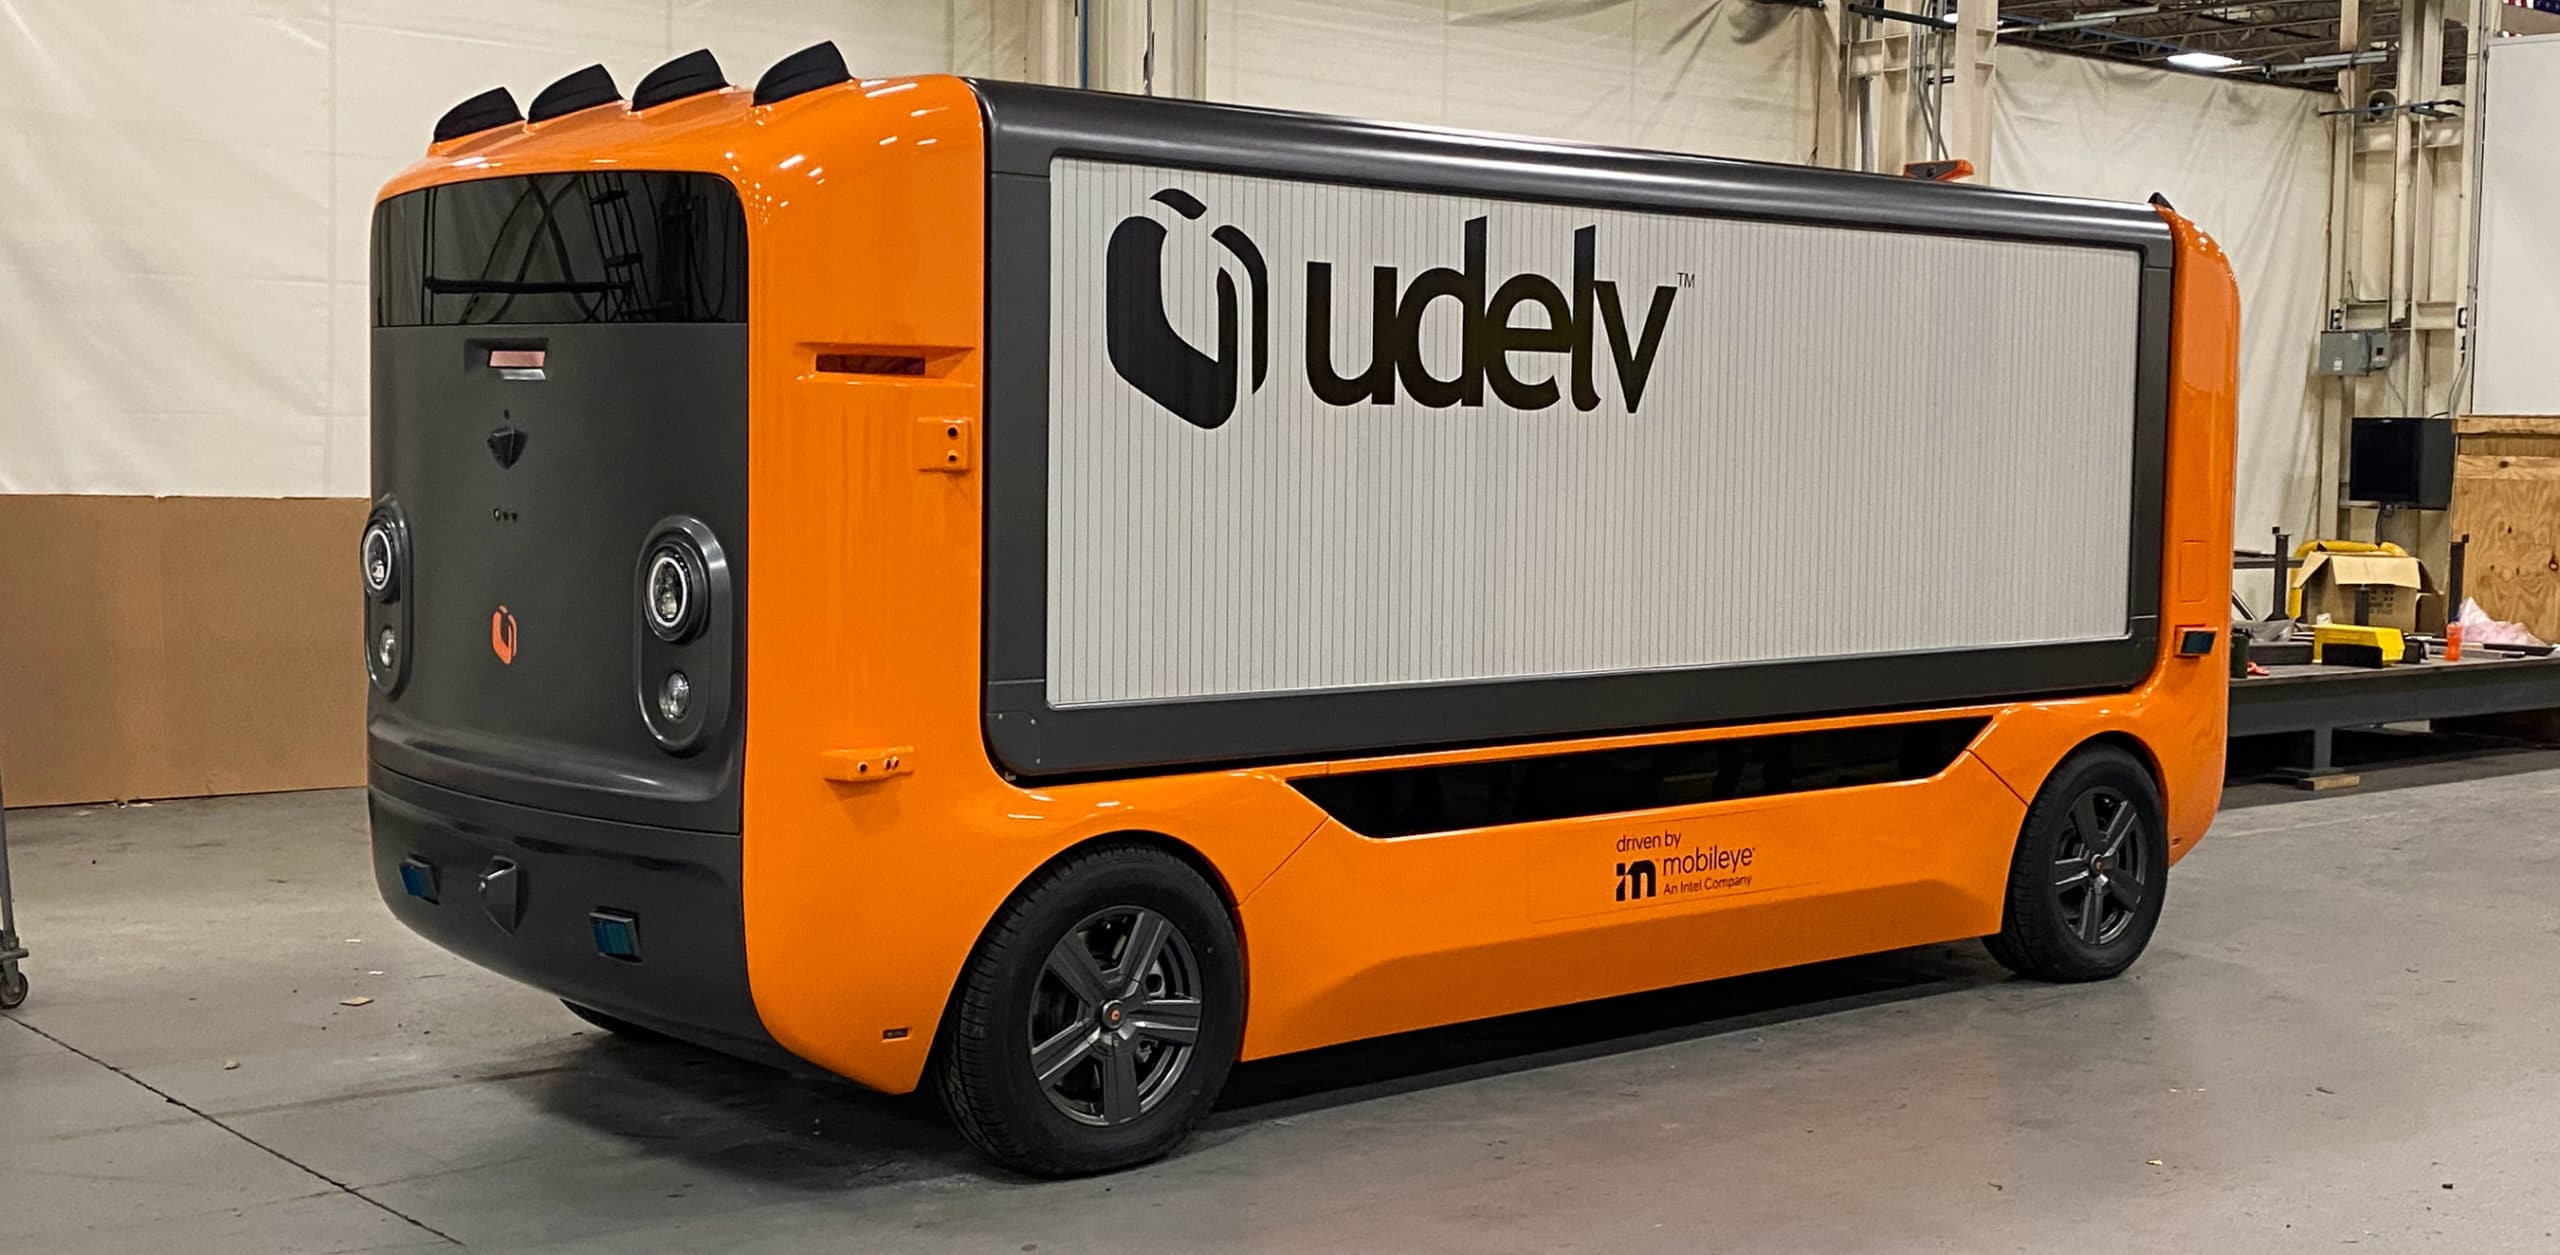 Udelv Unveils Autonomous Cab-Less Transporter, driven by Mobileye, virtually at CES 2022